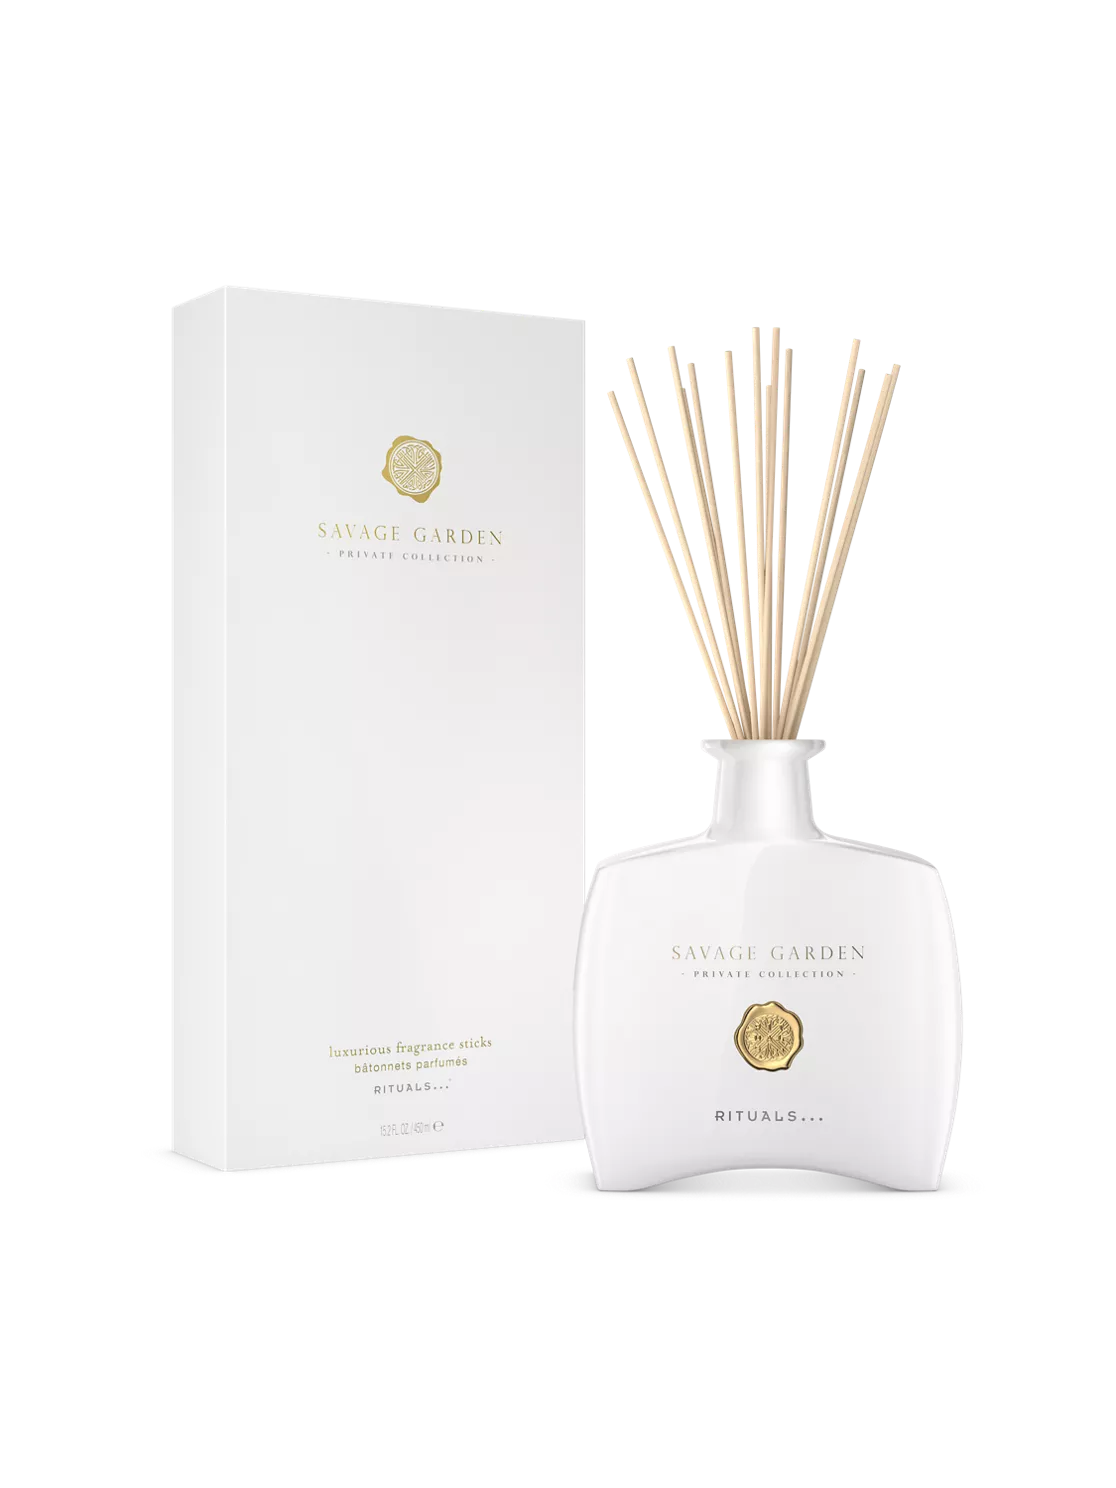 Private Collection Savage Garden Fragrance Sticks - luxurious